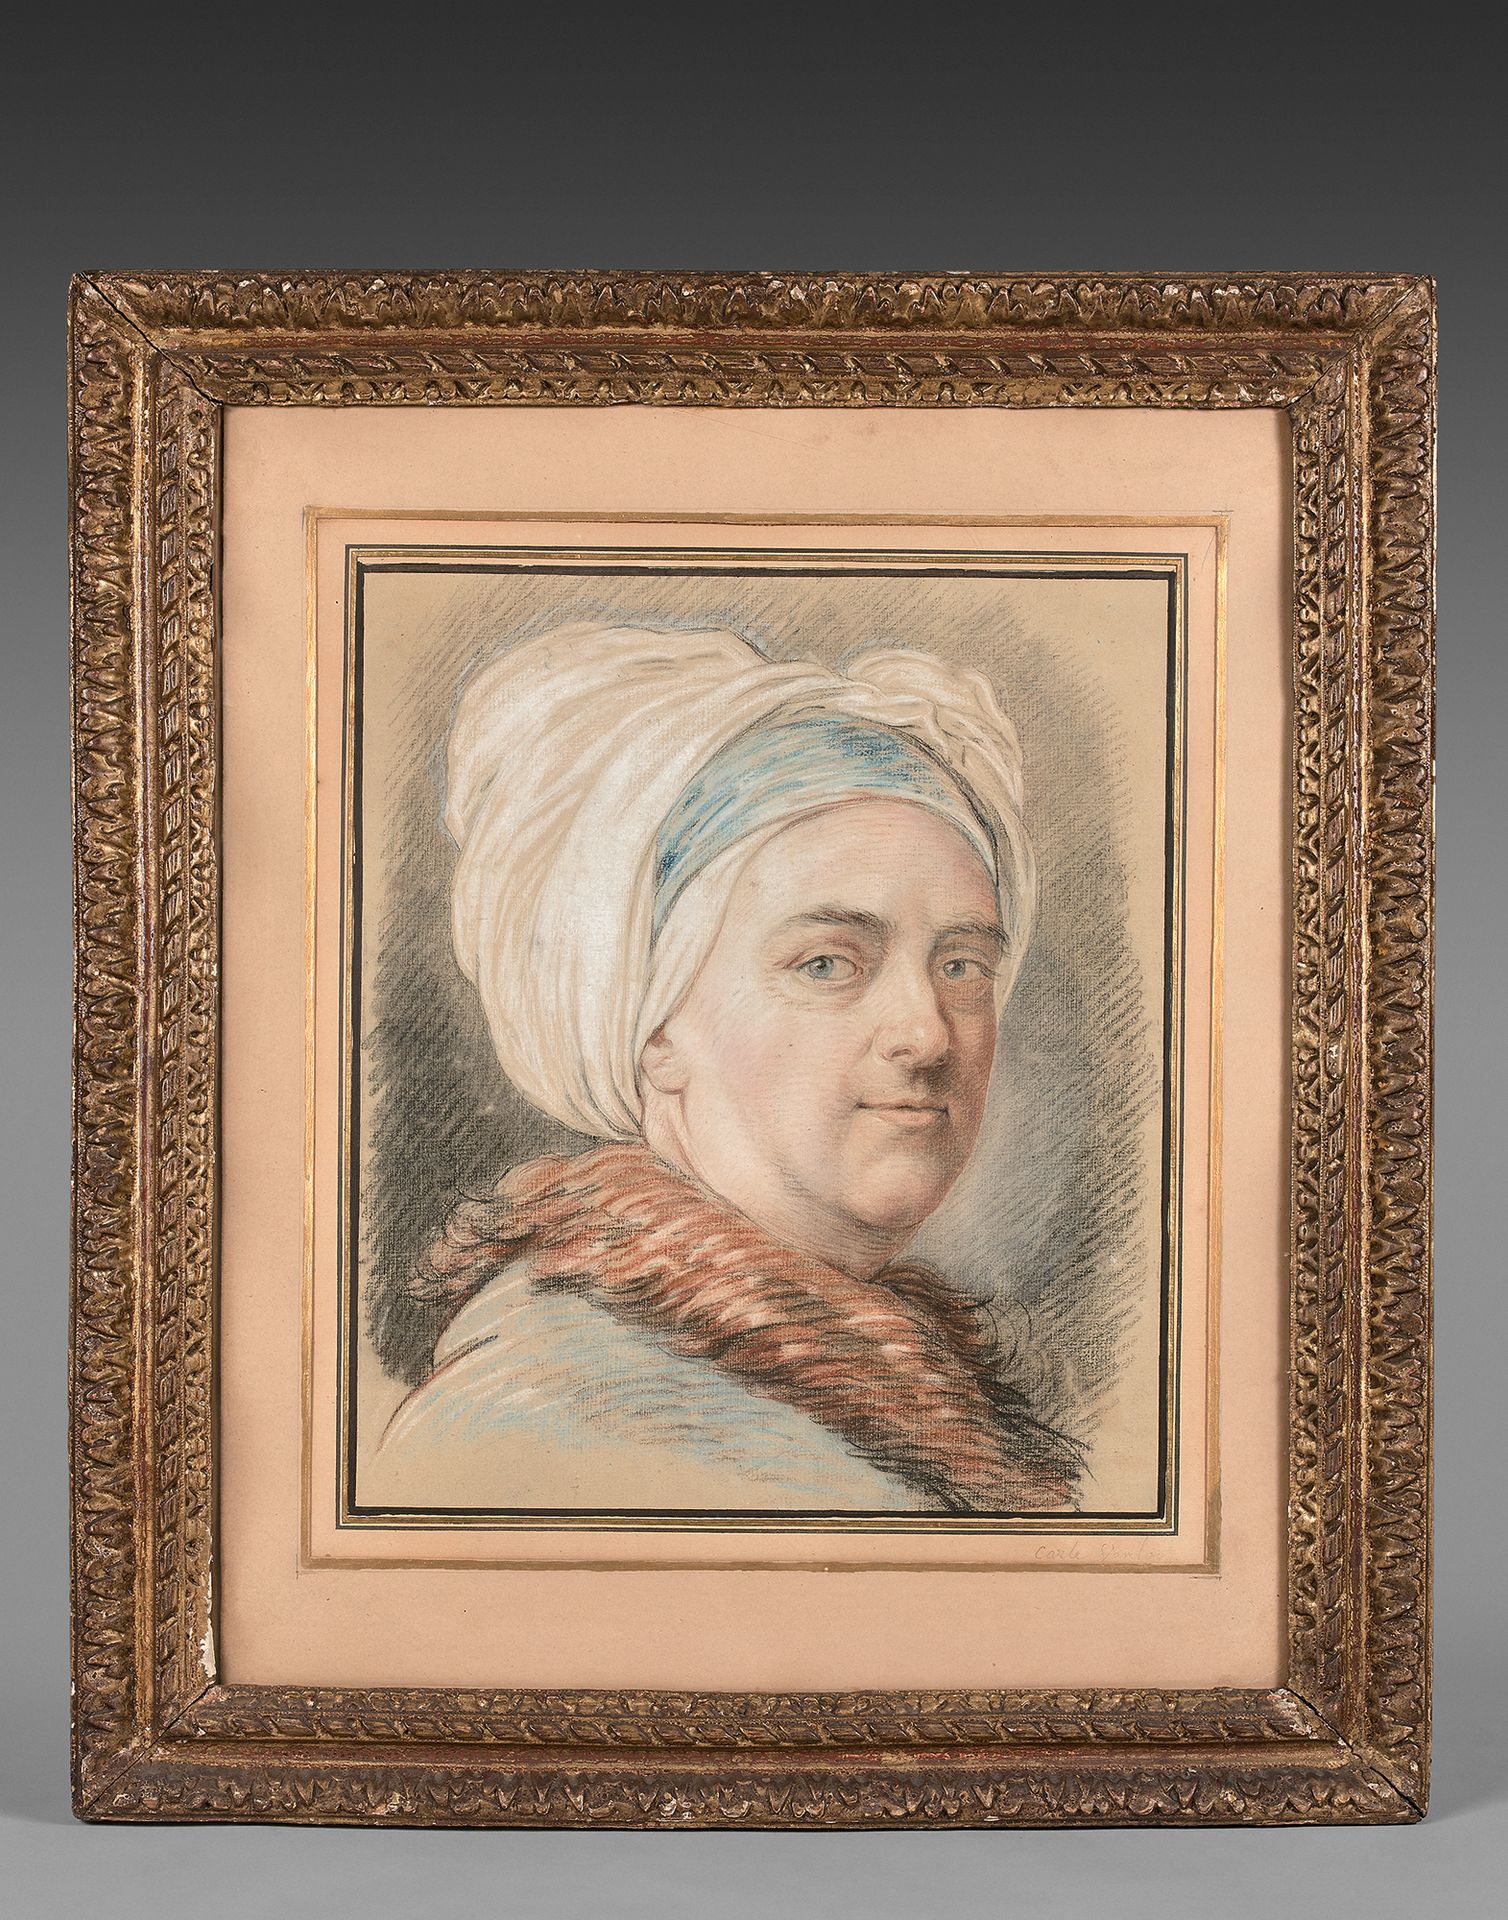 Charles-André dit Carle van LOO (Nice 1705 - Paris 1765) 
推测为带头巾和毛领的自画像
米色纸上的黑石、&hellip;